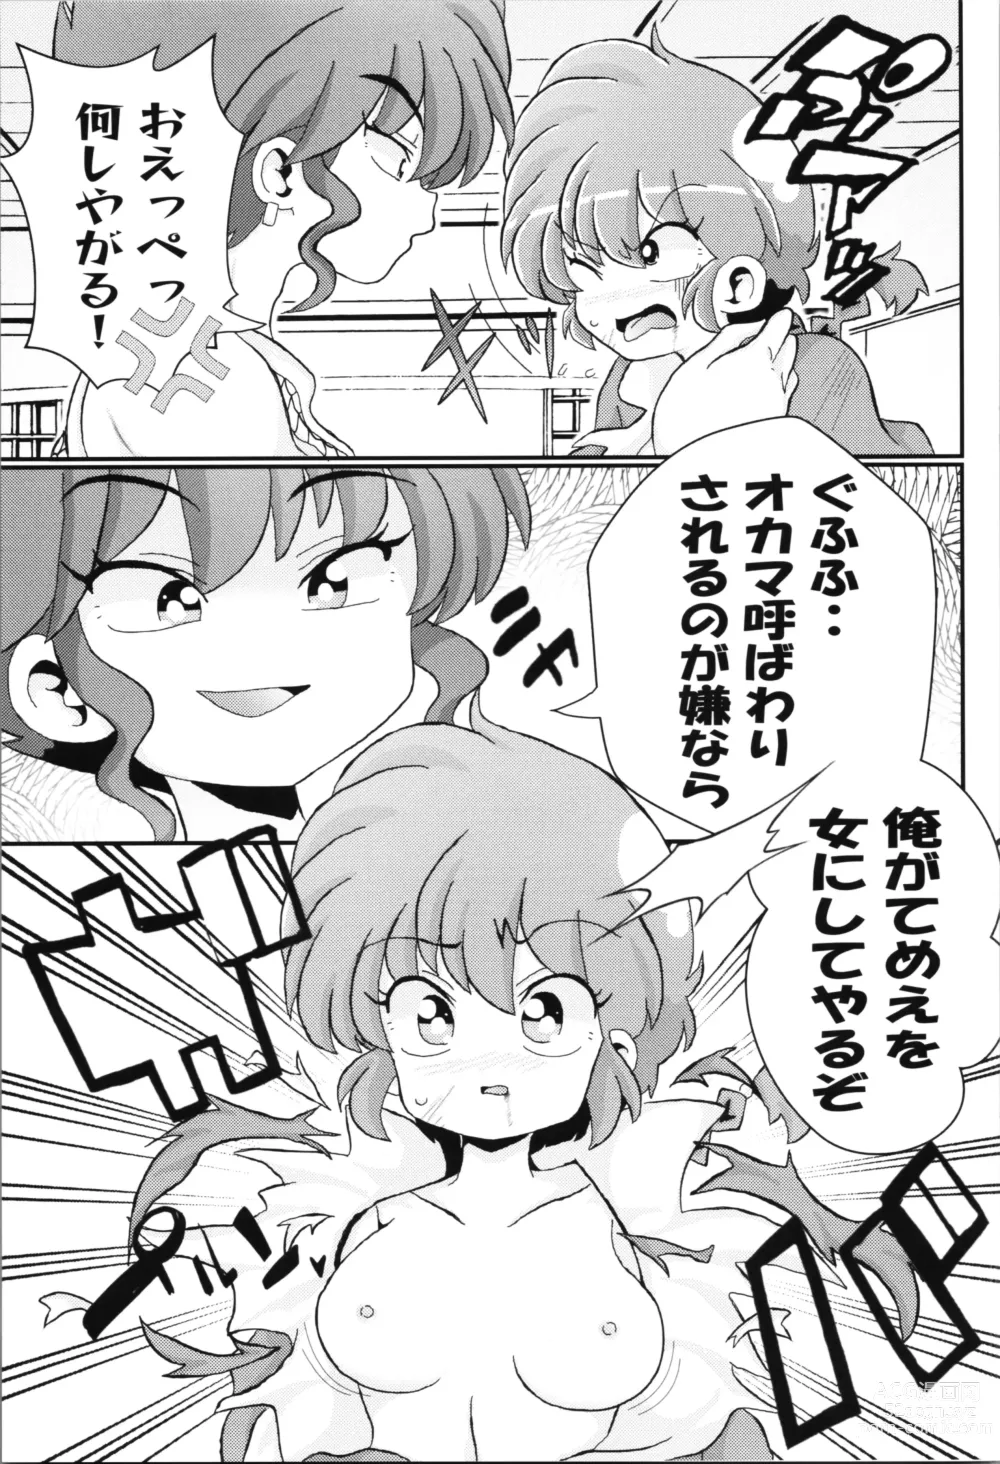 Page 9 of doujinshi You Too!